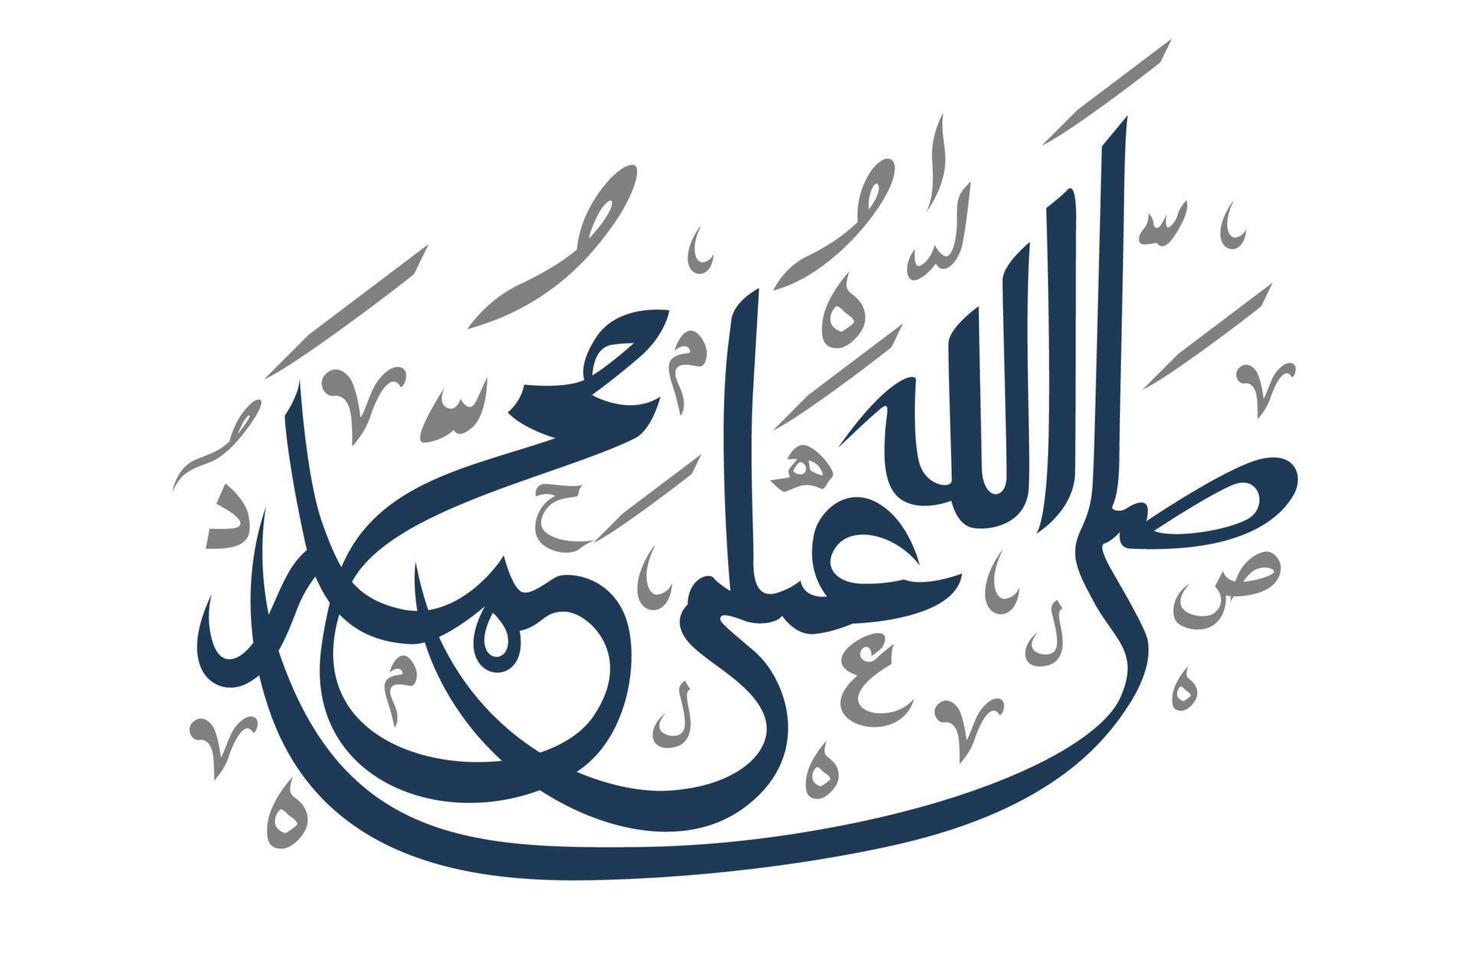 Shallahu ala muhammad arabische kalligrafie. vertaald god zegene muhammad vector